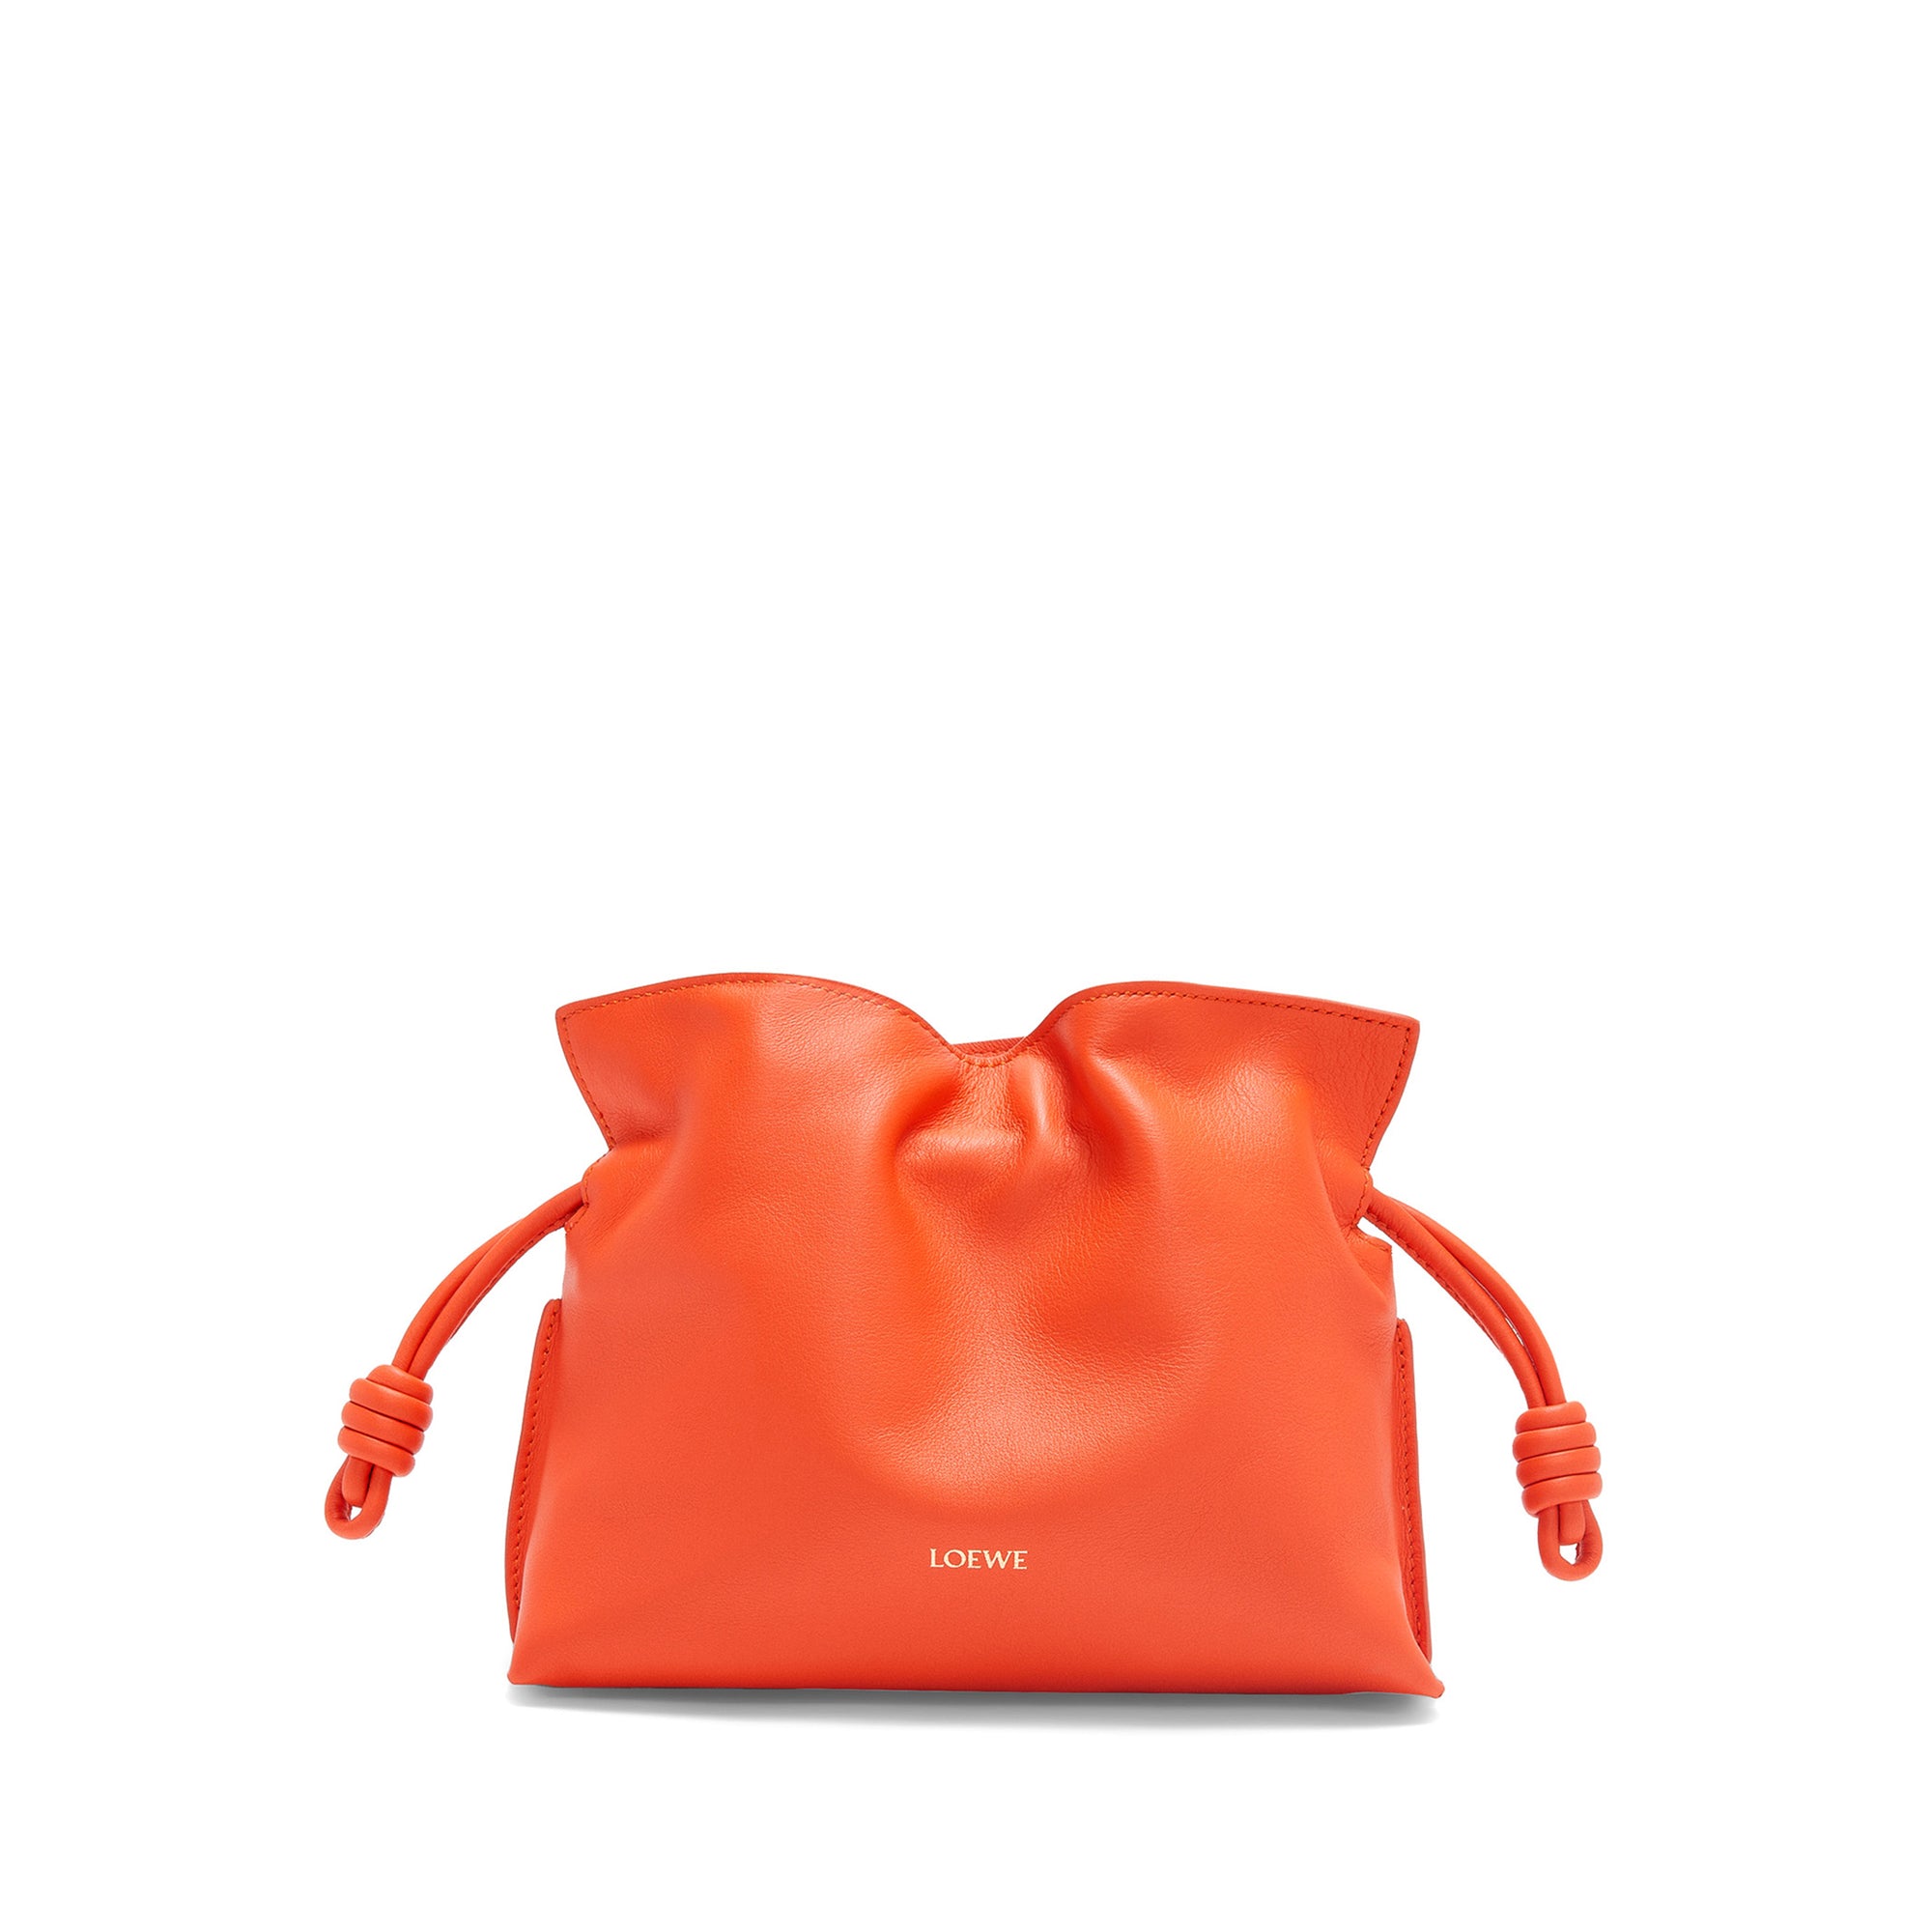 Loewe - Women's Flamenco Clutch Mini Bag - (Vivid Orange) view 1